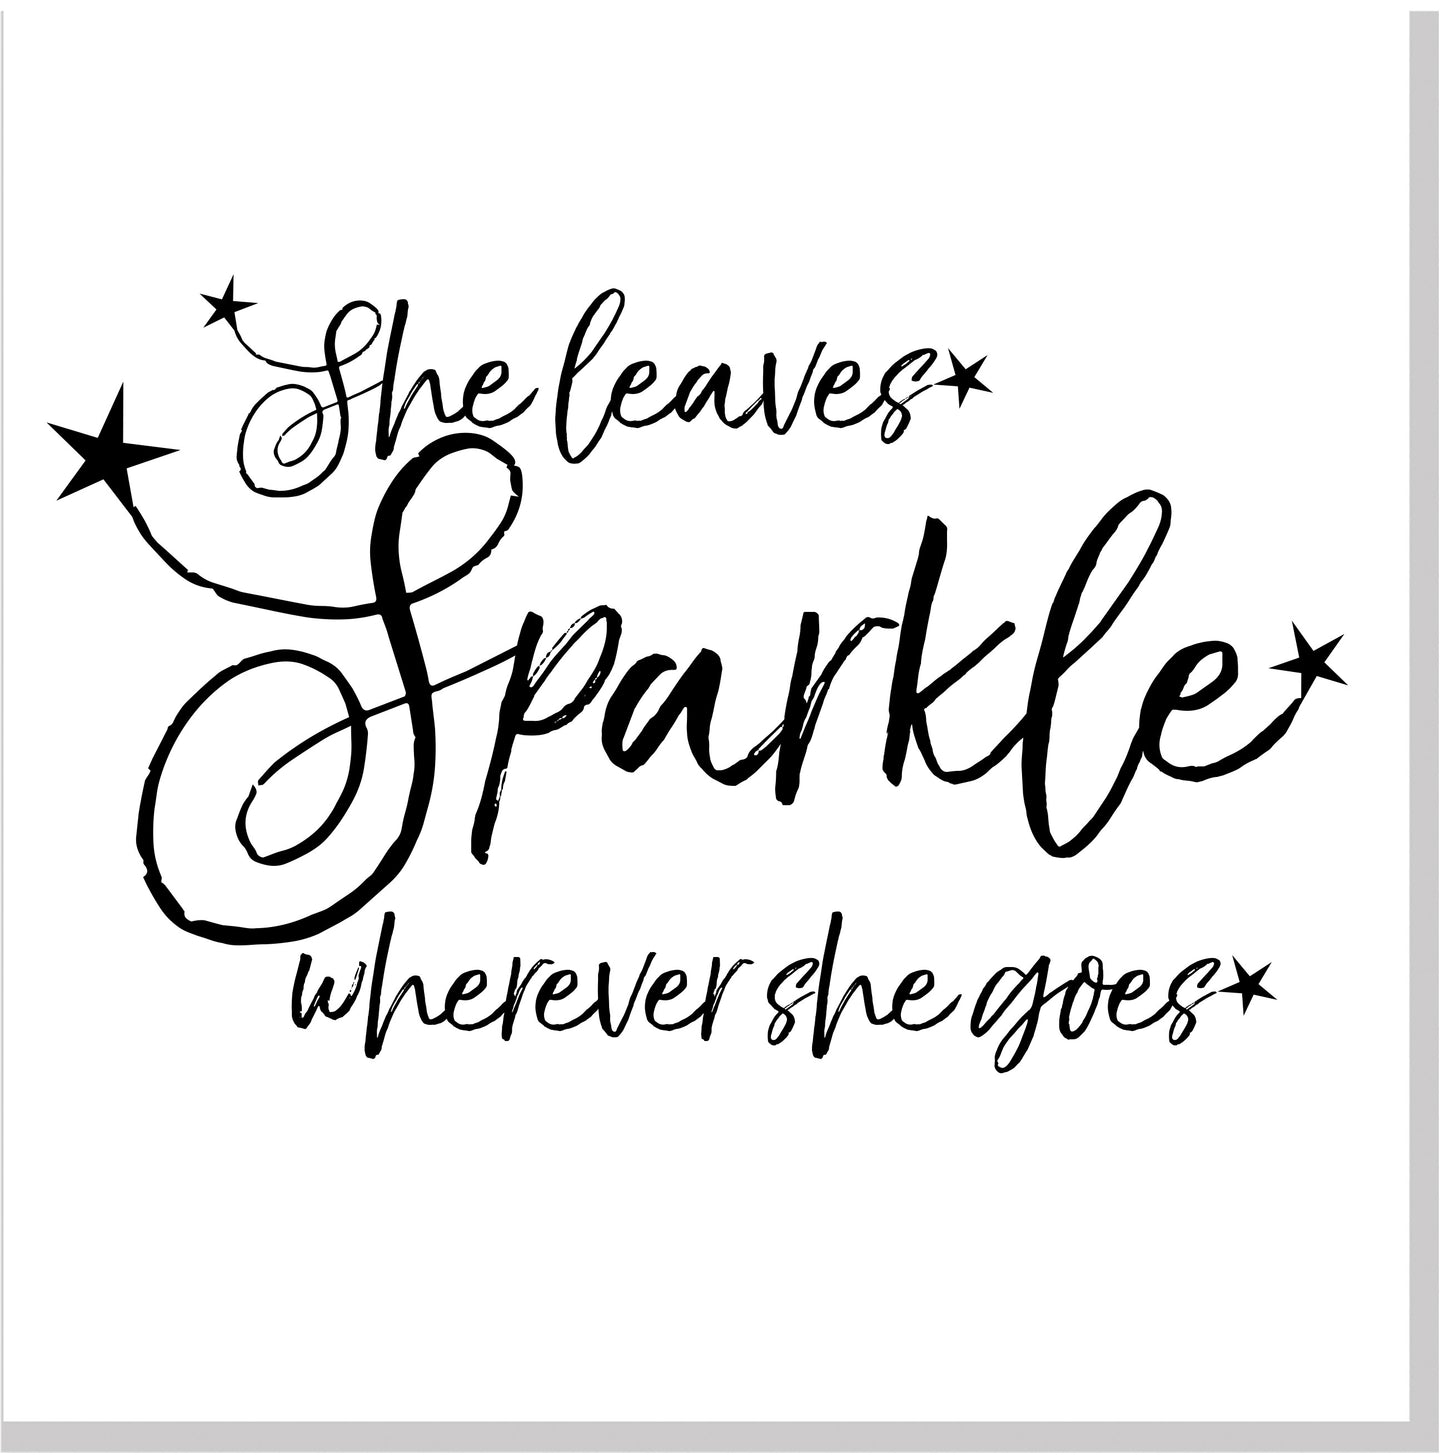 She leaves sparkle stars square card